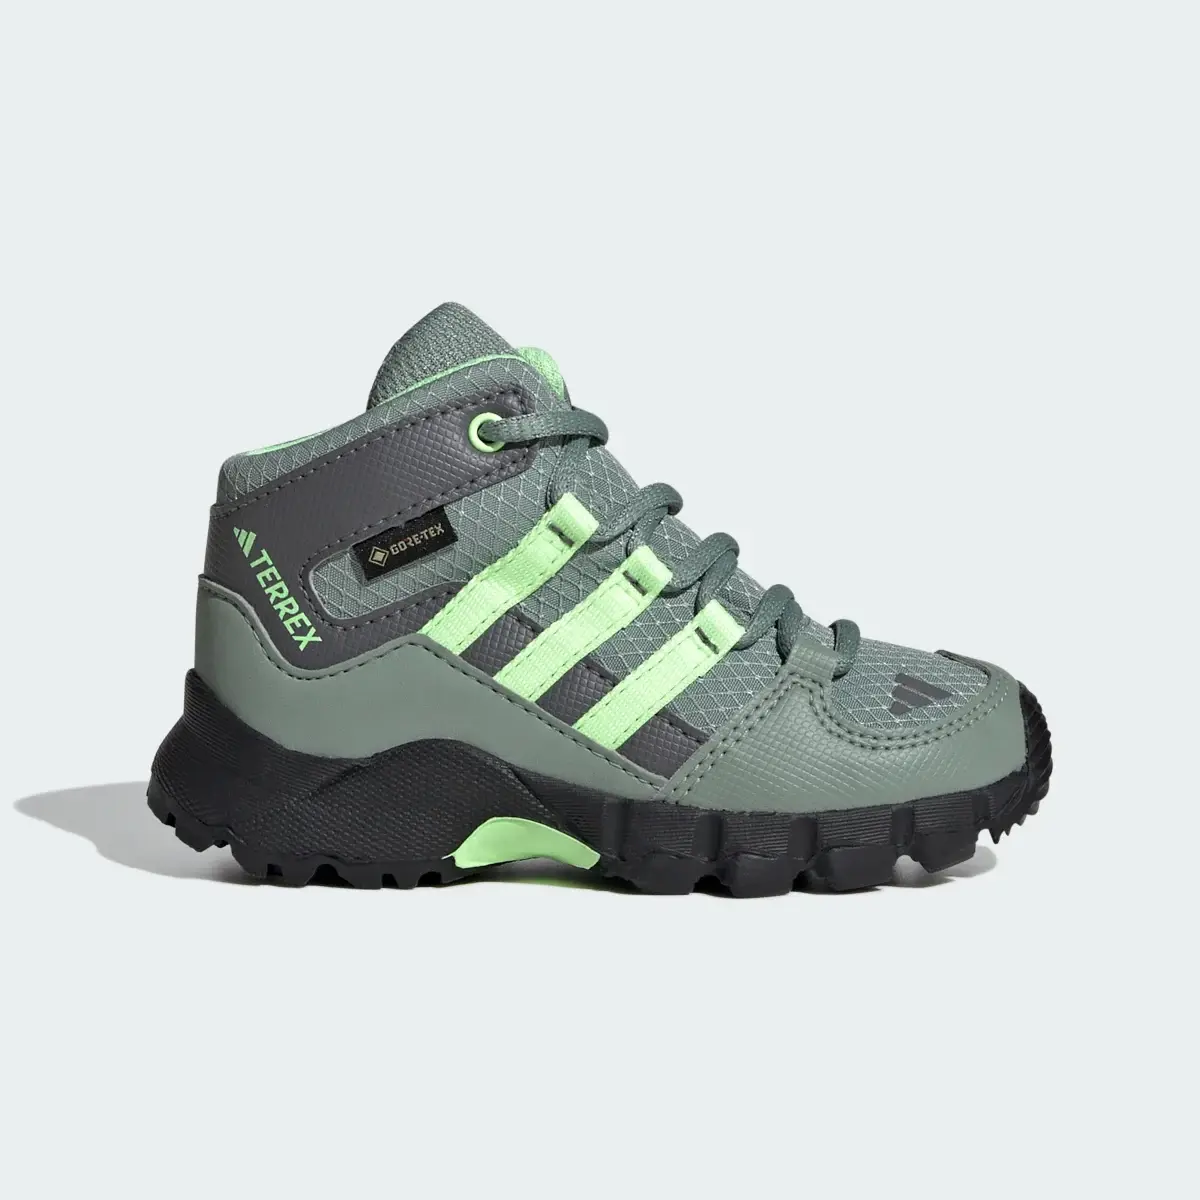 Adidas Terrex Mid GORE-TEX Hiking Shoes. 2